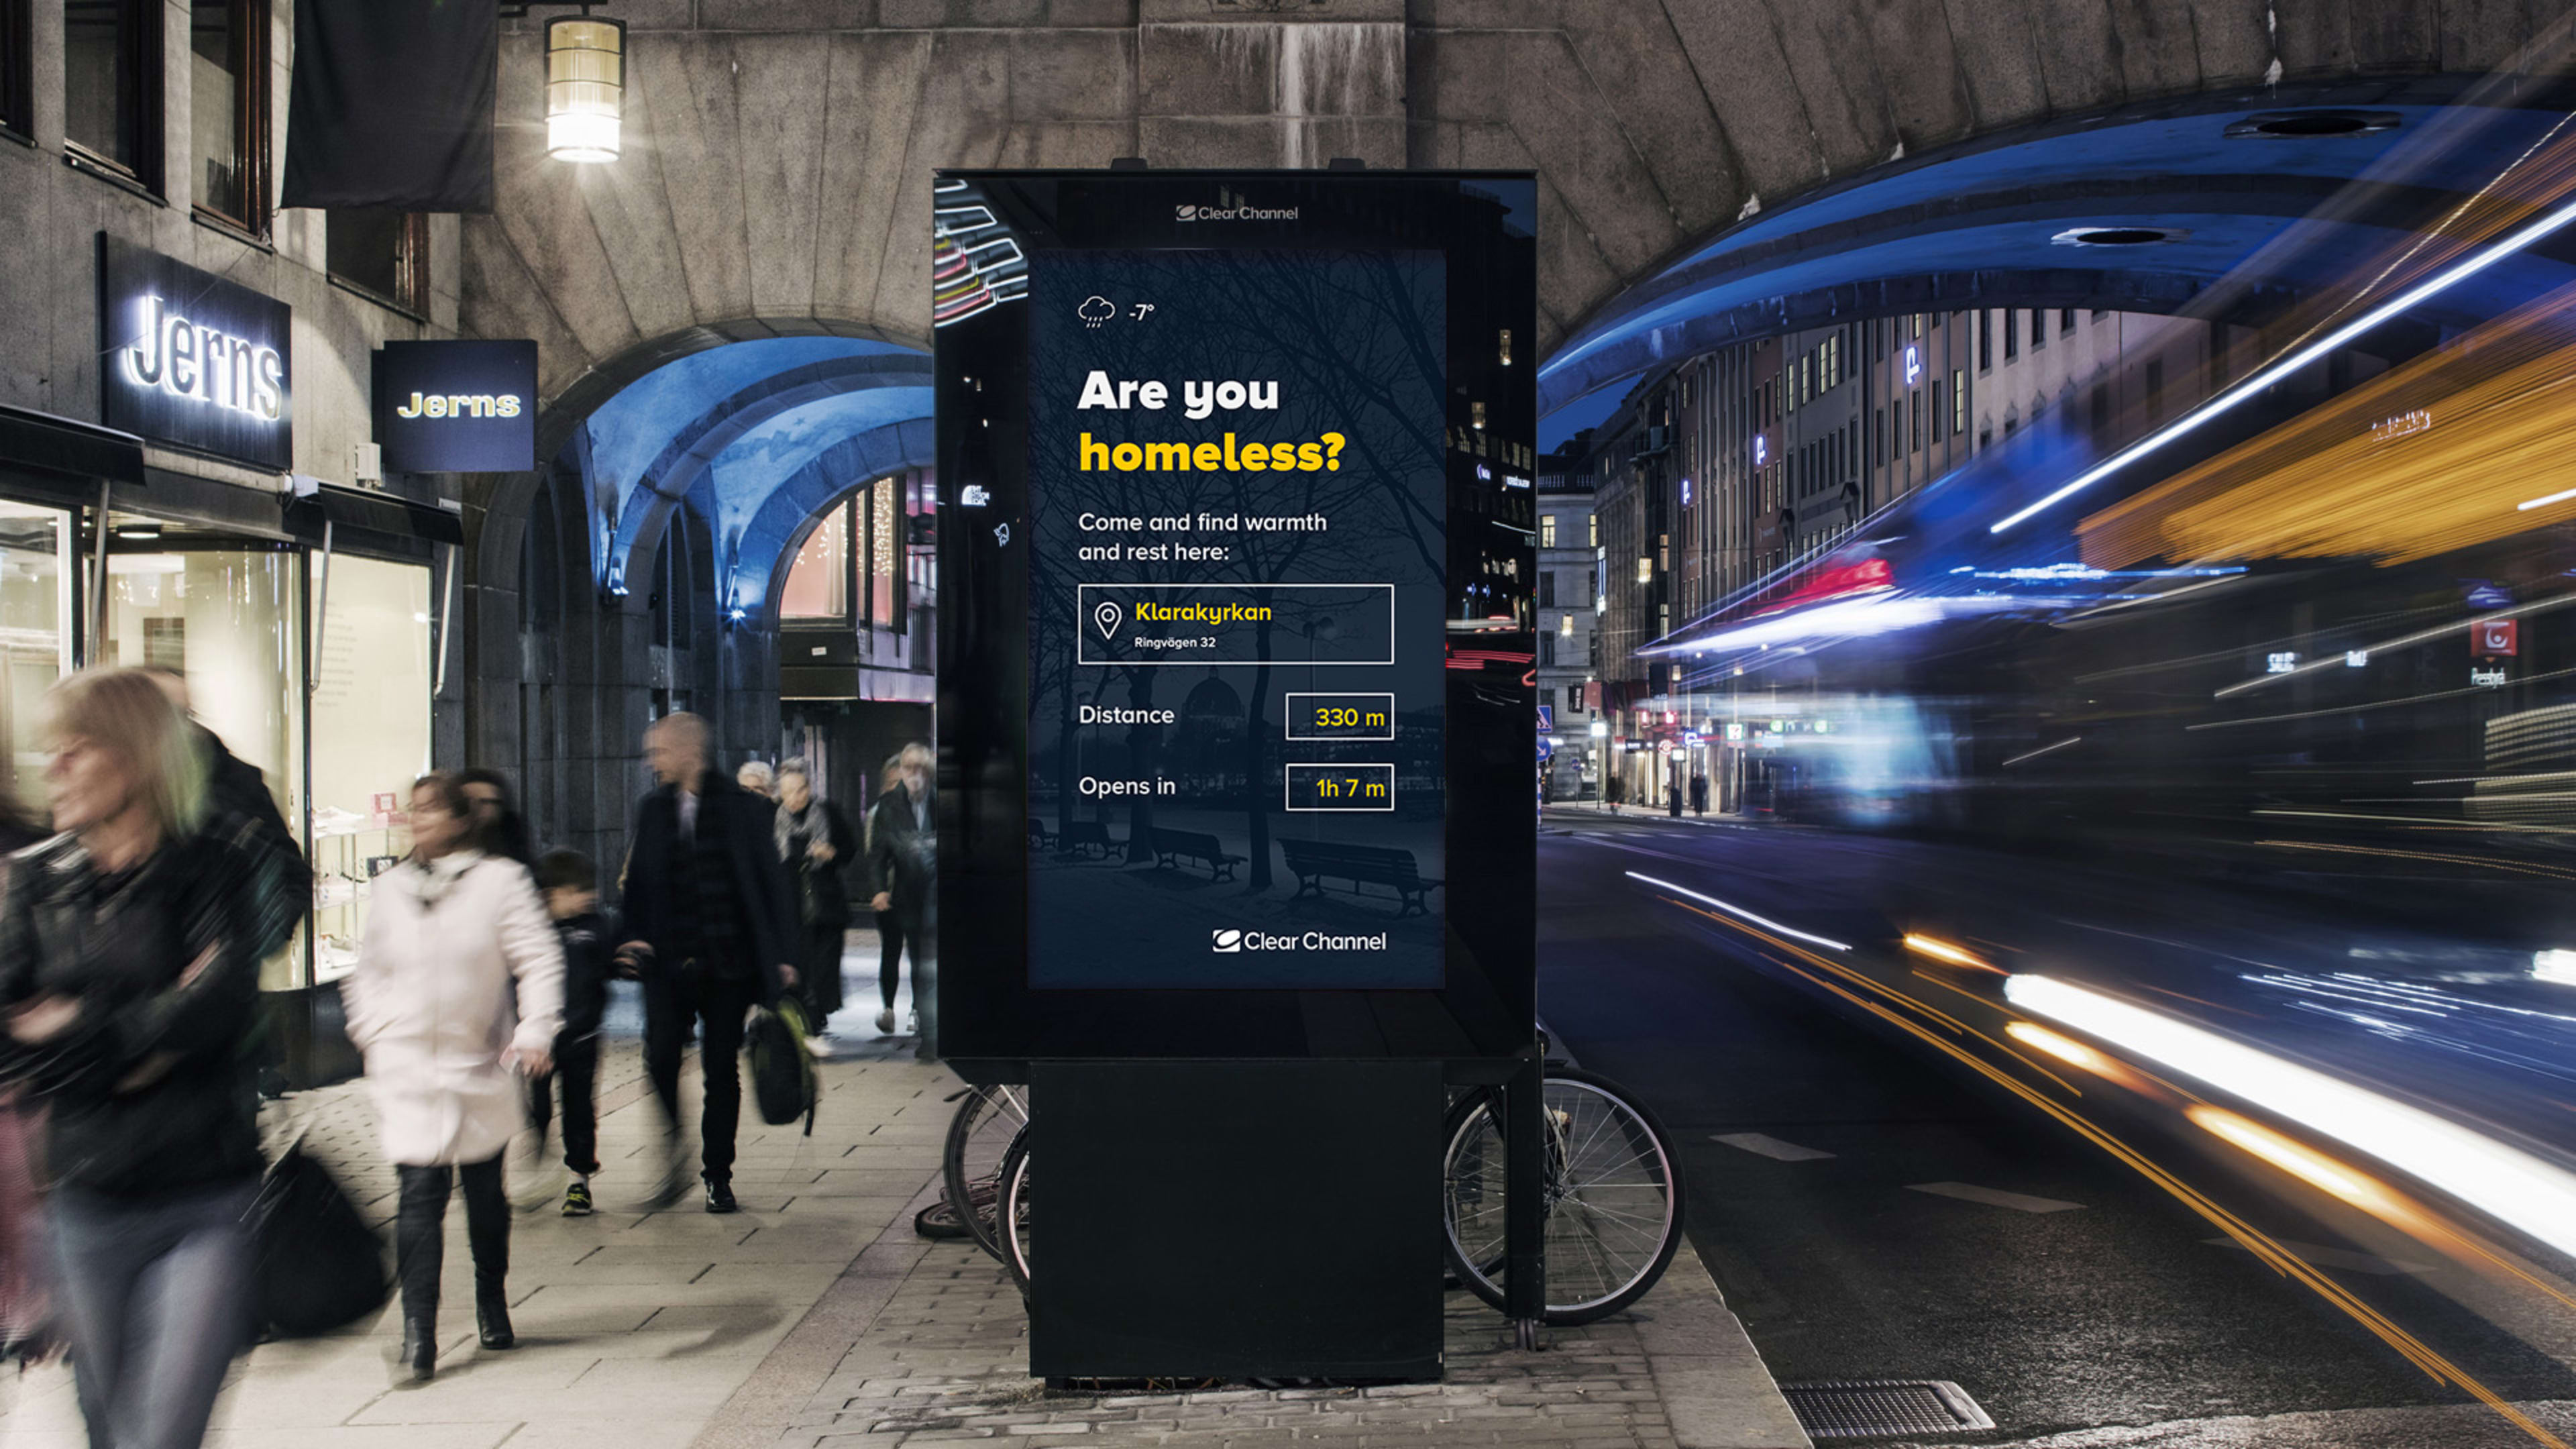 These digital ads help Stockholm’s homeless find shelter